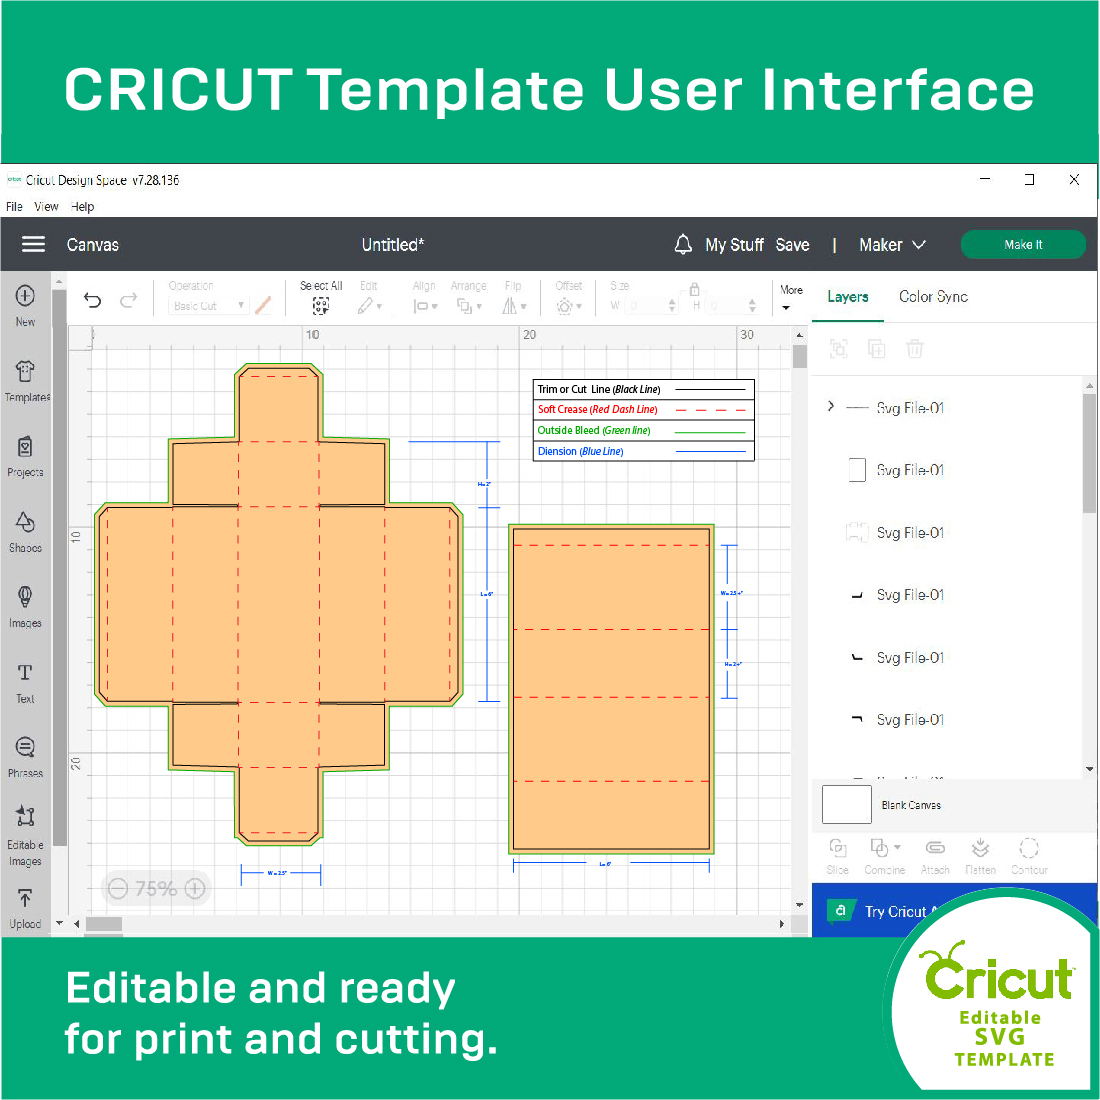 Screen shot of the cricut template user interface.